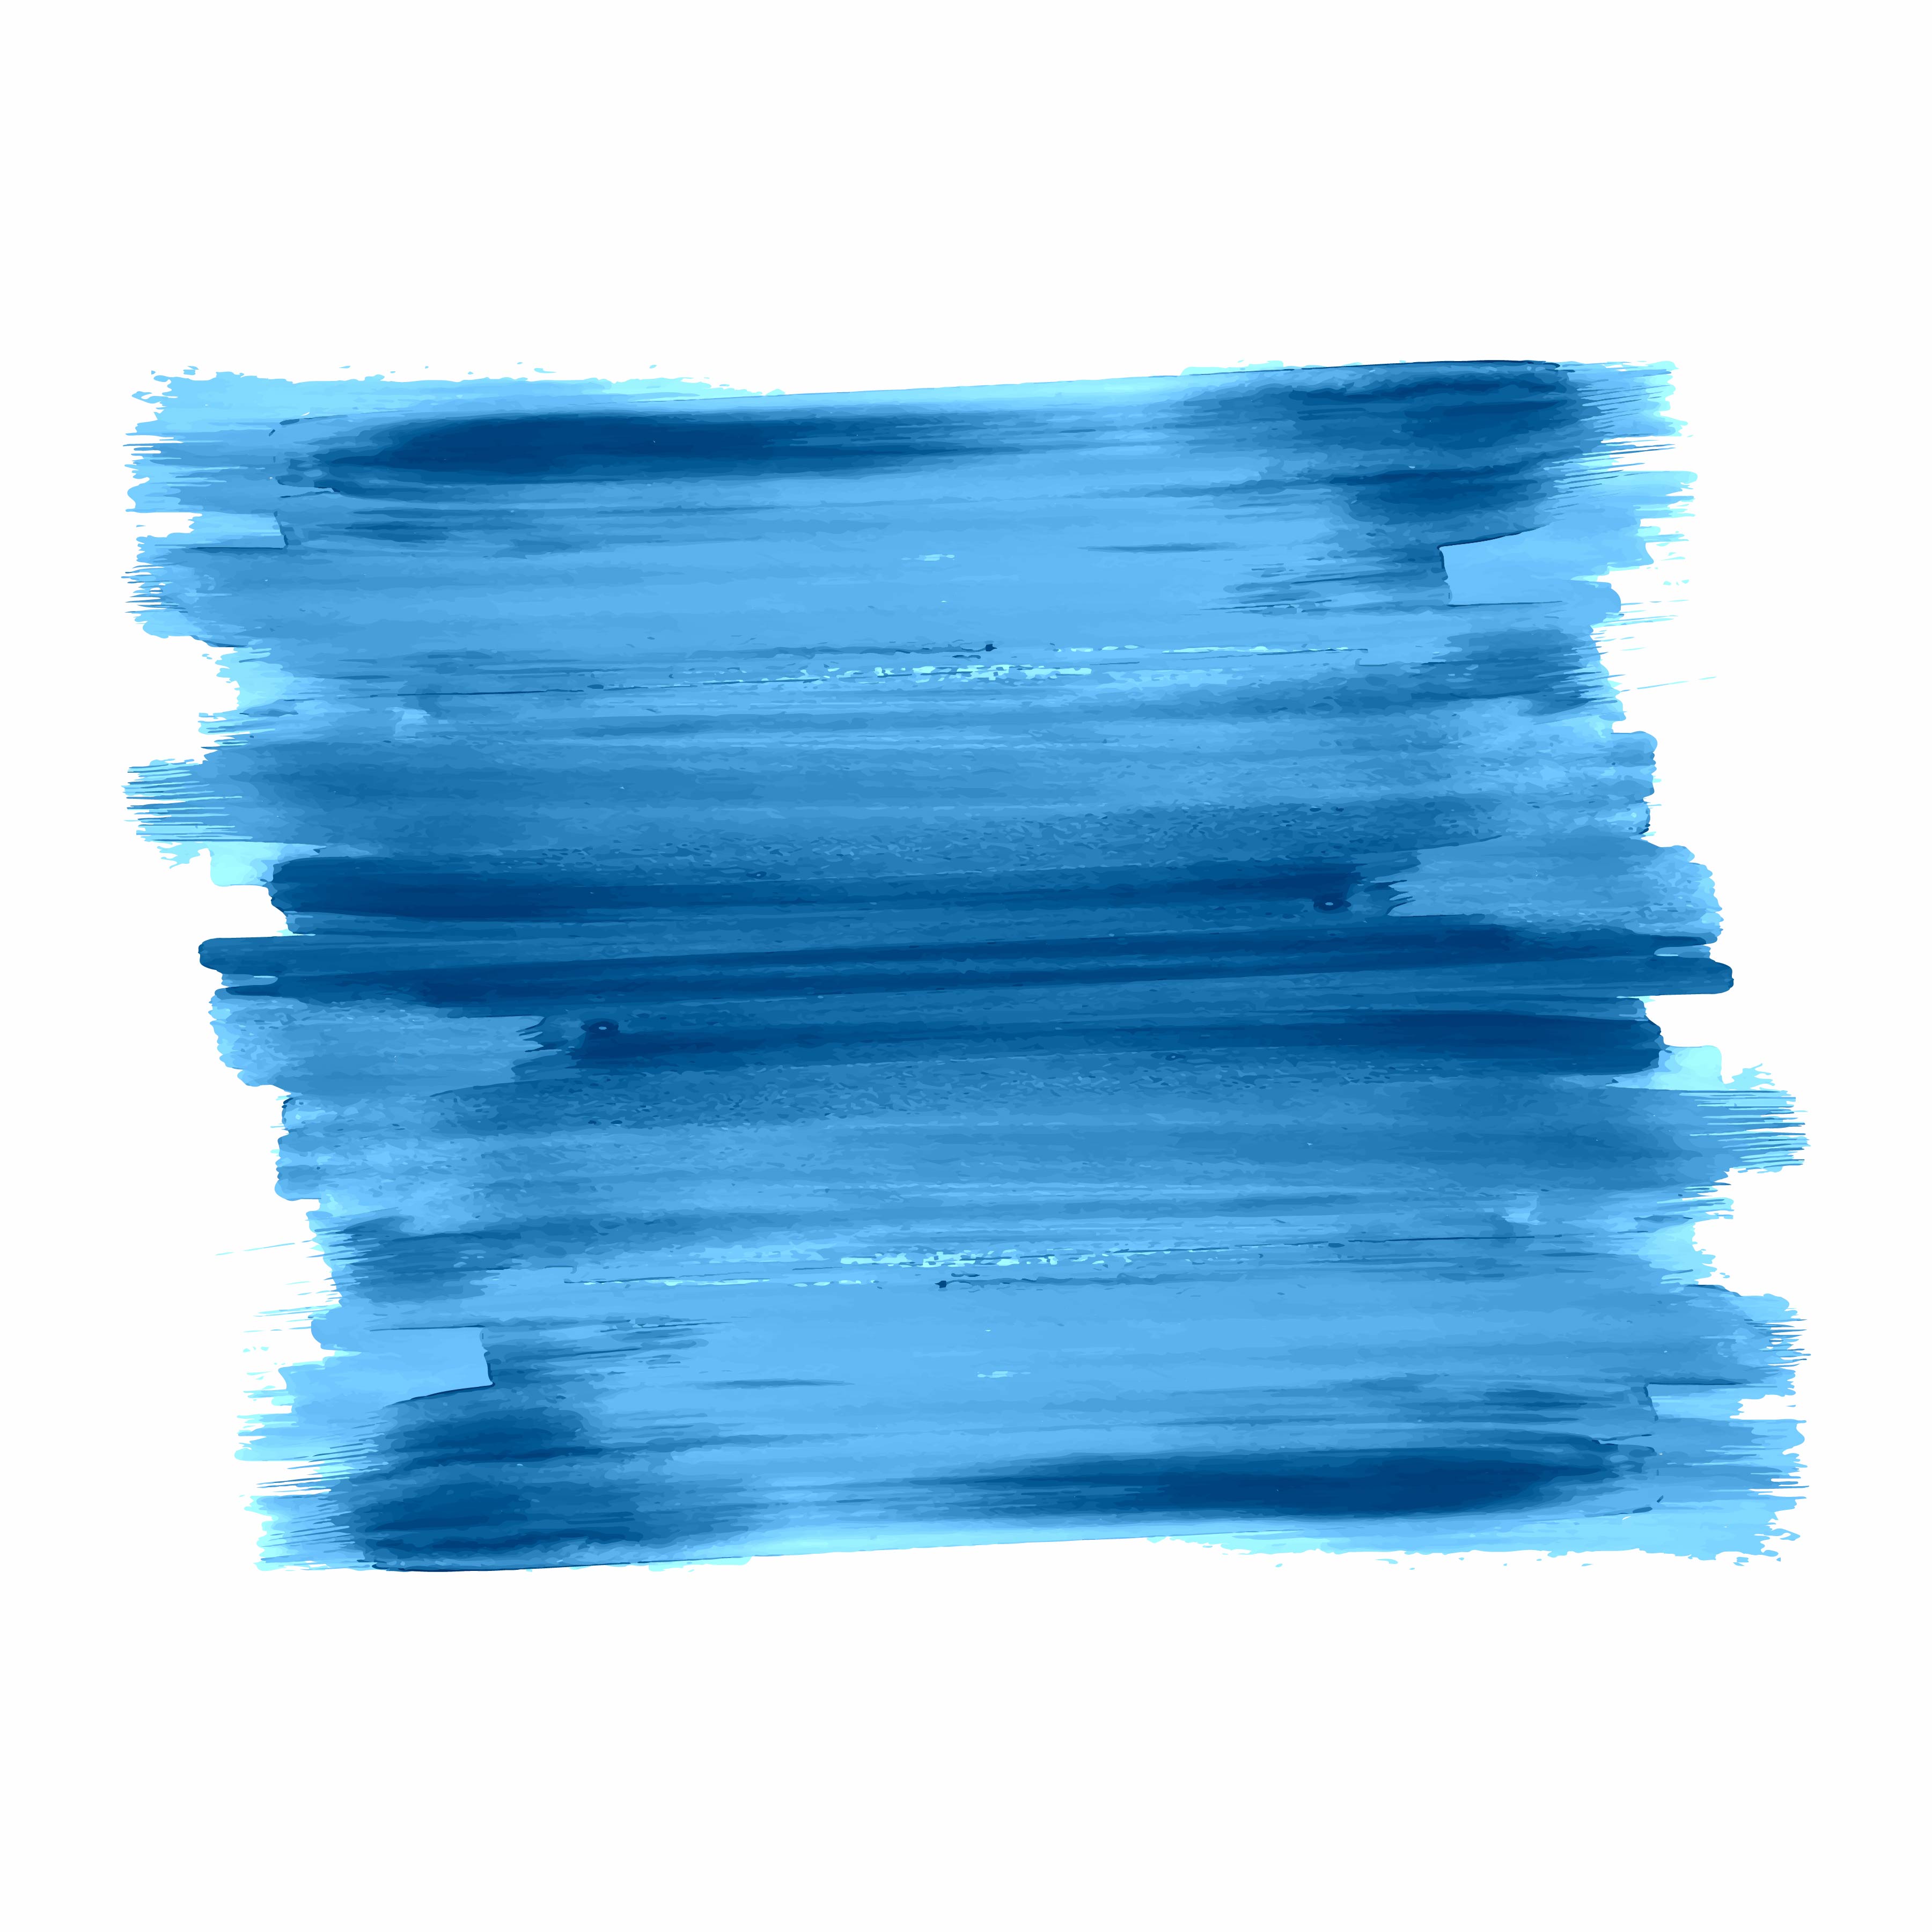 Download Watercolor blue stroke design vector - Download Free Vectors, Clipart Graphics & Vector Art